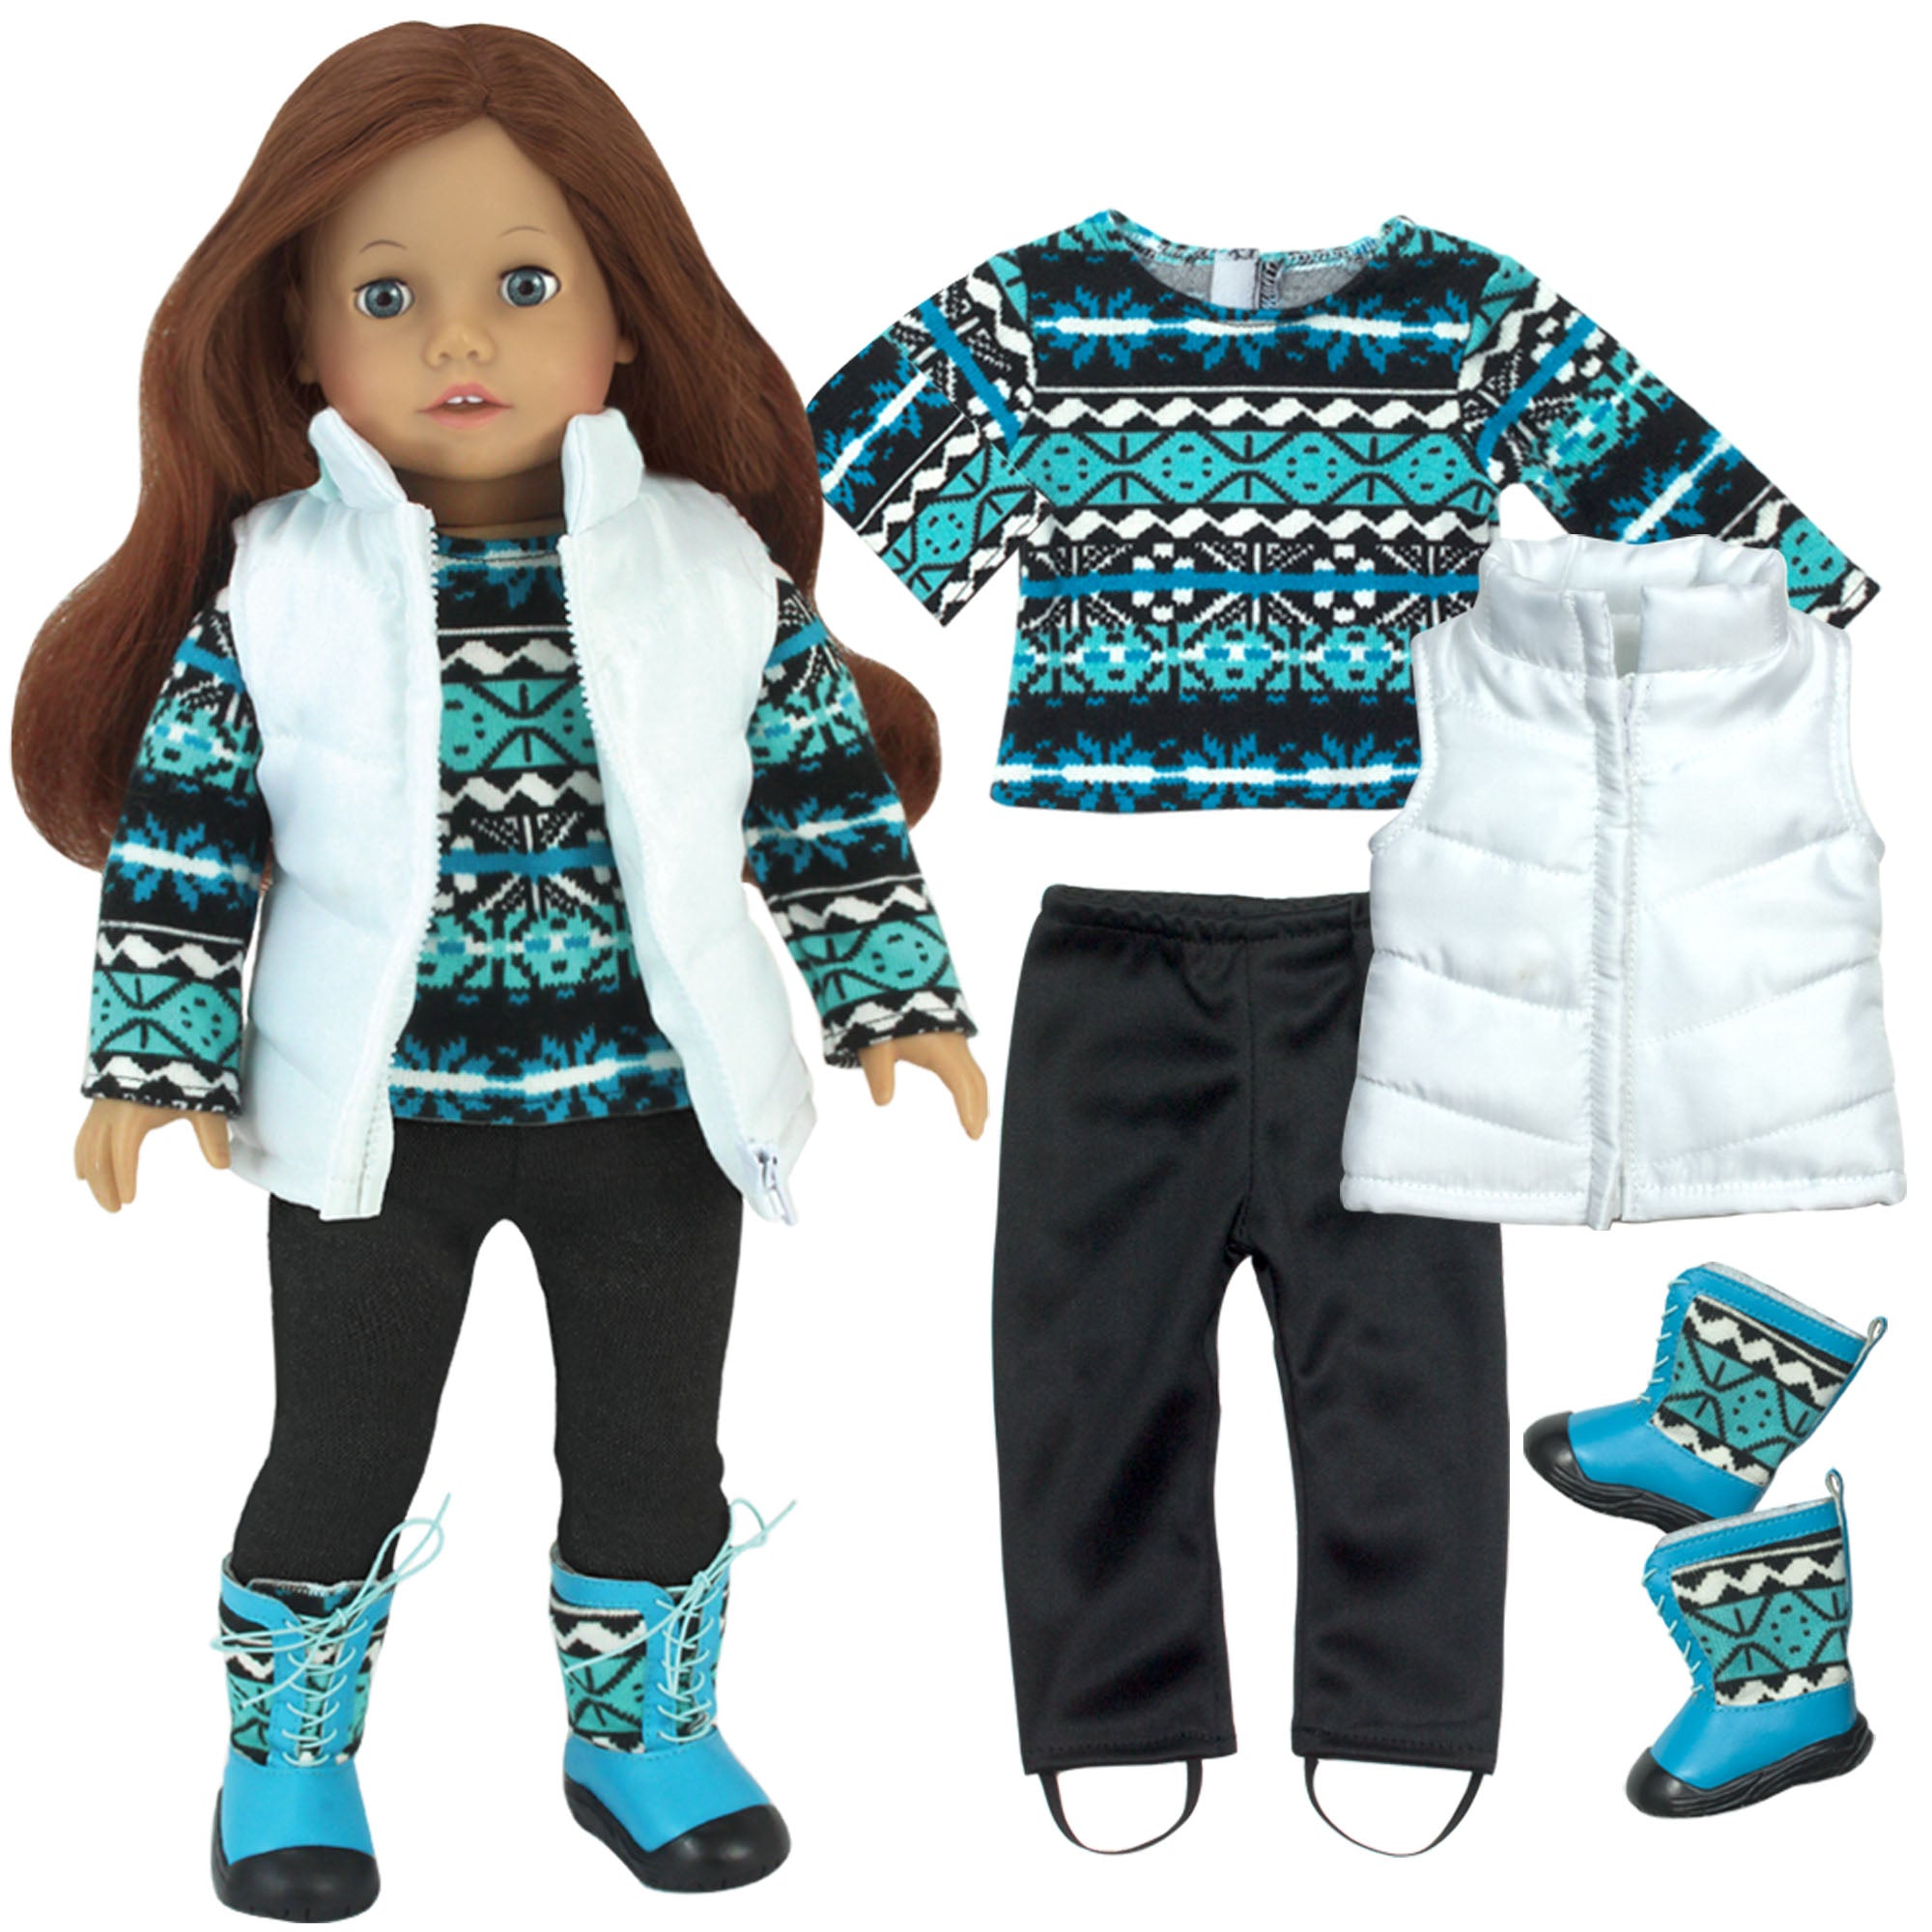 Sophia’s Sweater, Leggings, Vest, and Boots Set for 18" Dolls